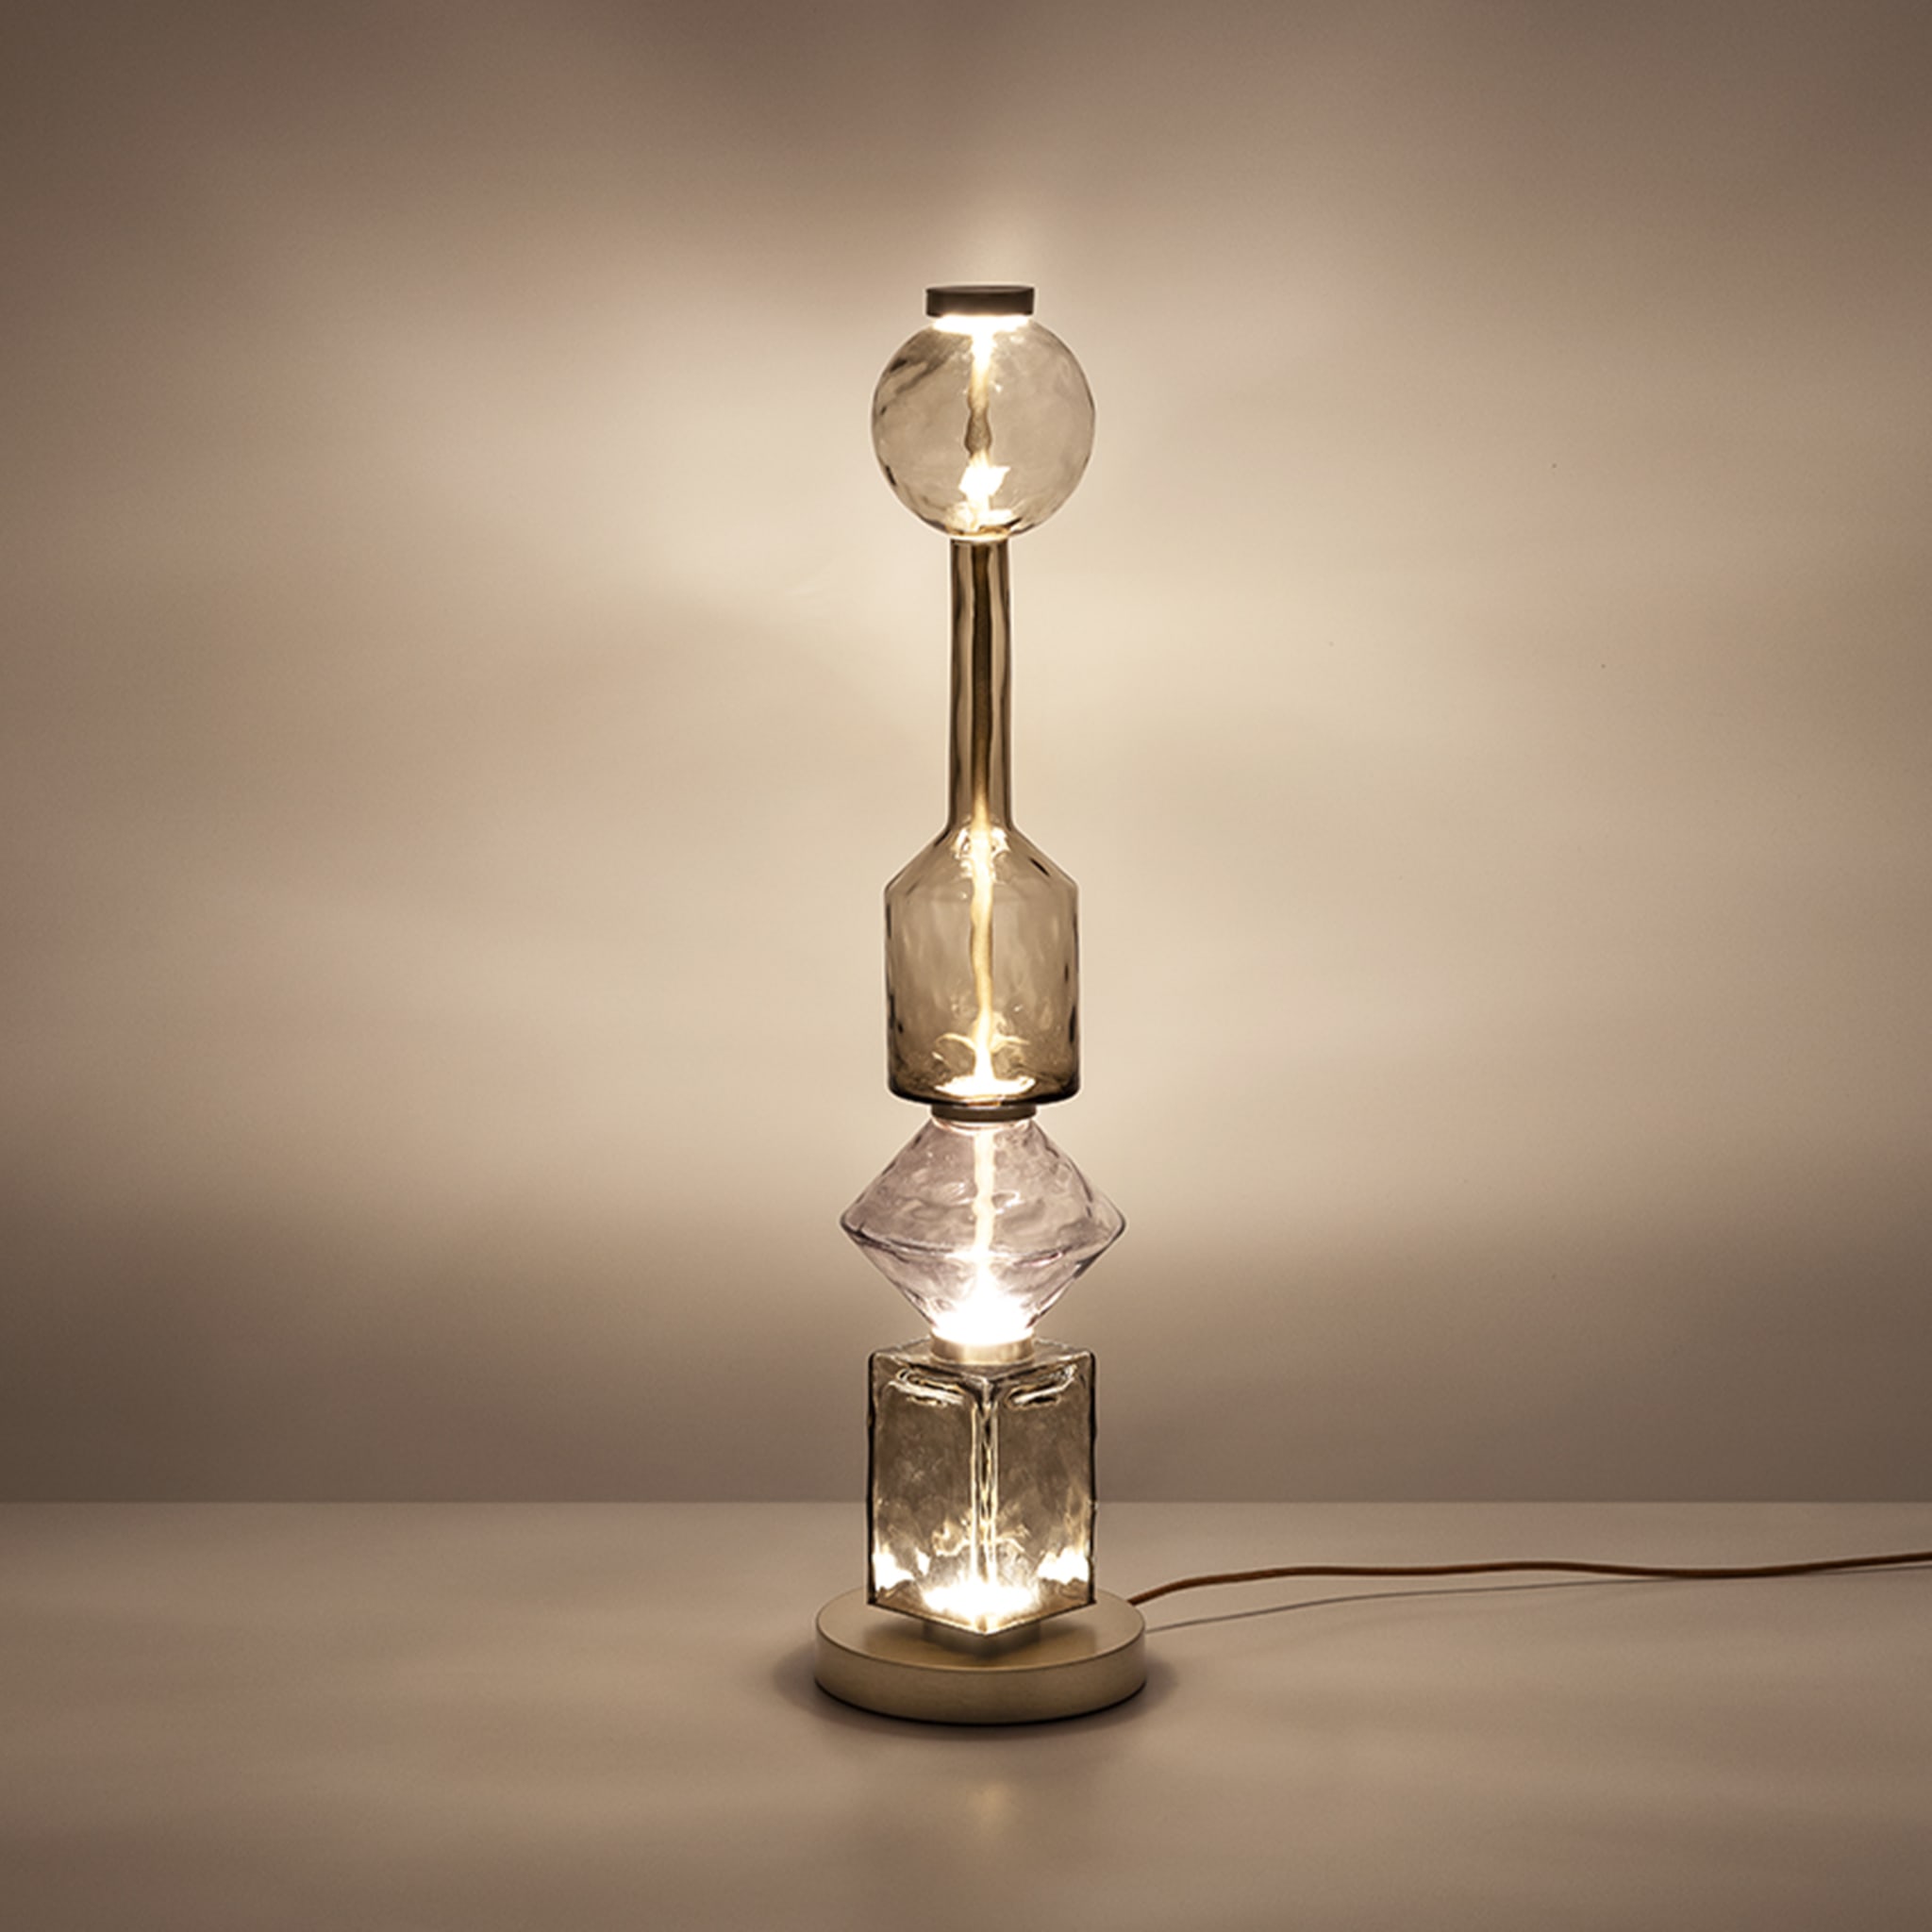 Morandi Icone Luminose Floor Lamp #2 - Alternative view 1